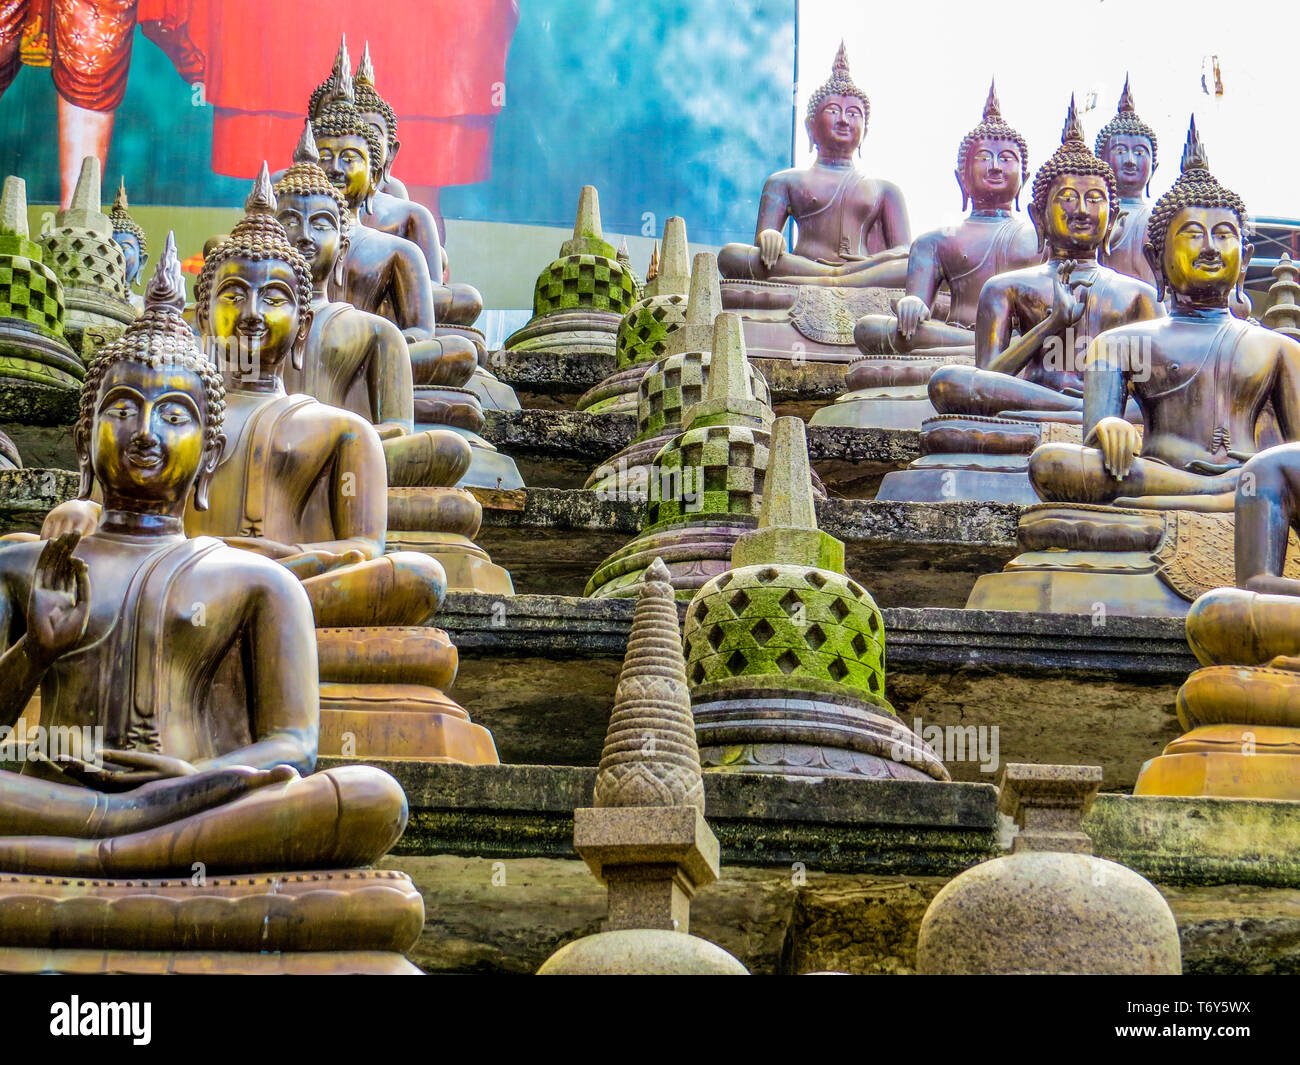 COLOMBO, SRI LANKA - DECEMBER 29, 2015: Buddha statues in Gangaramaya Buddhist Temple. Stock Photo